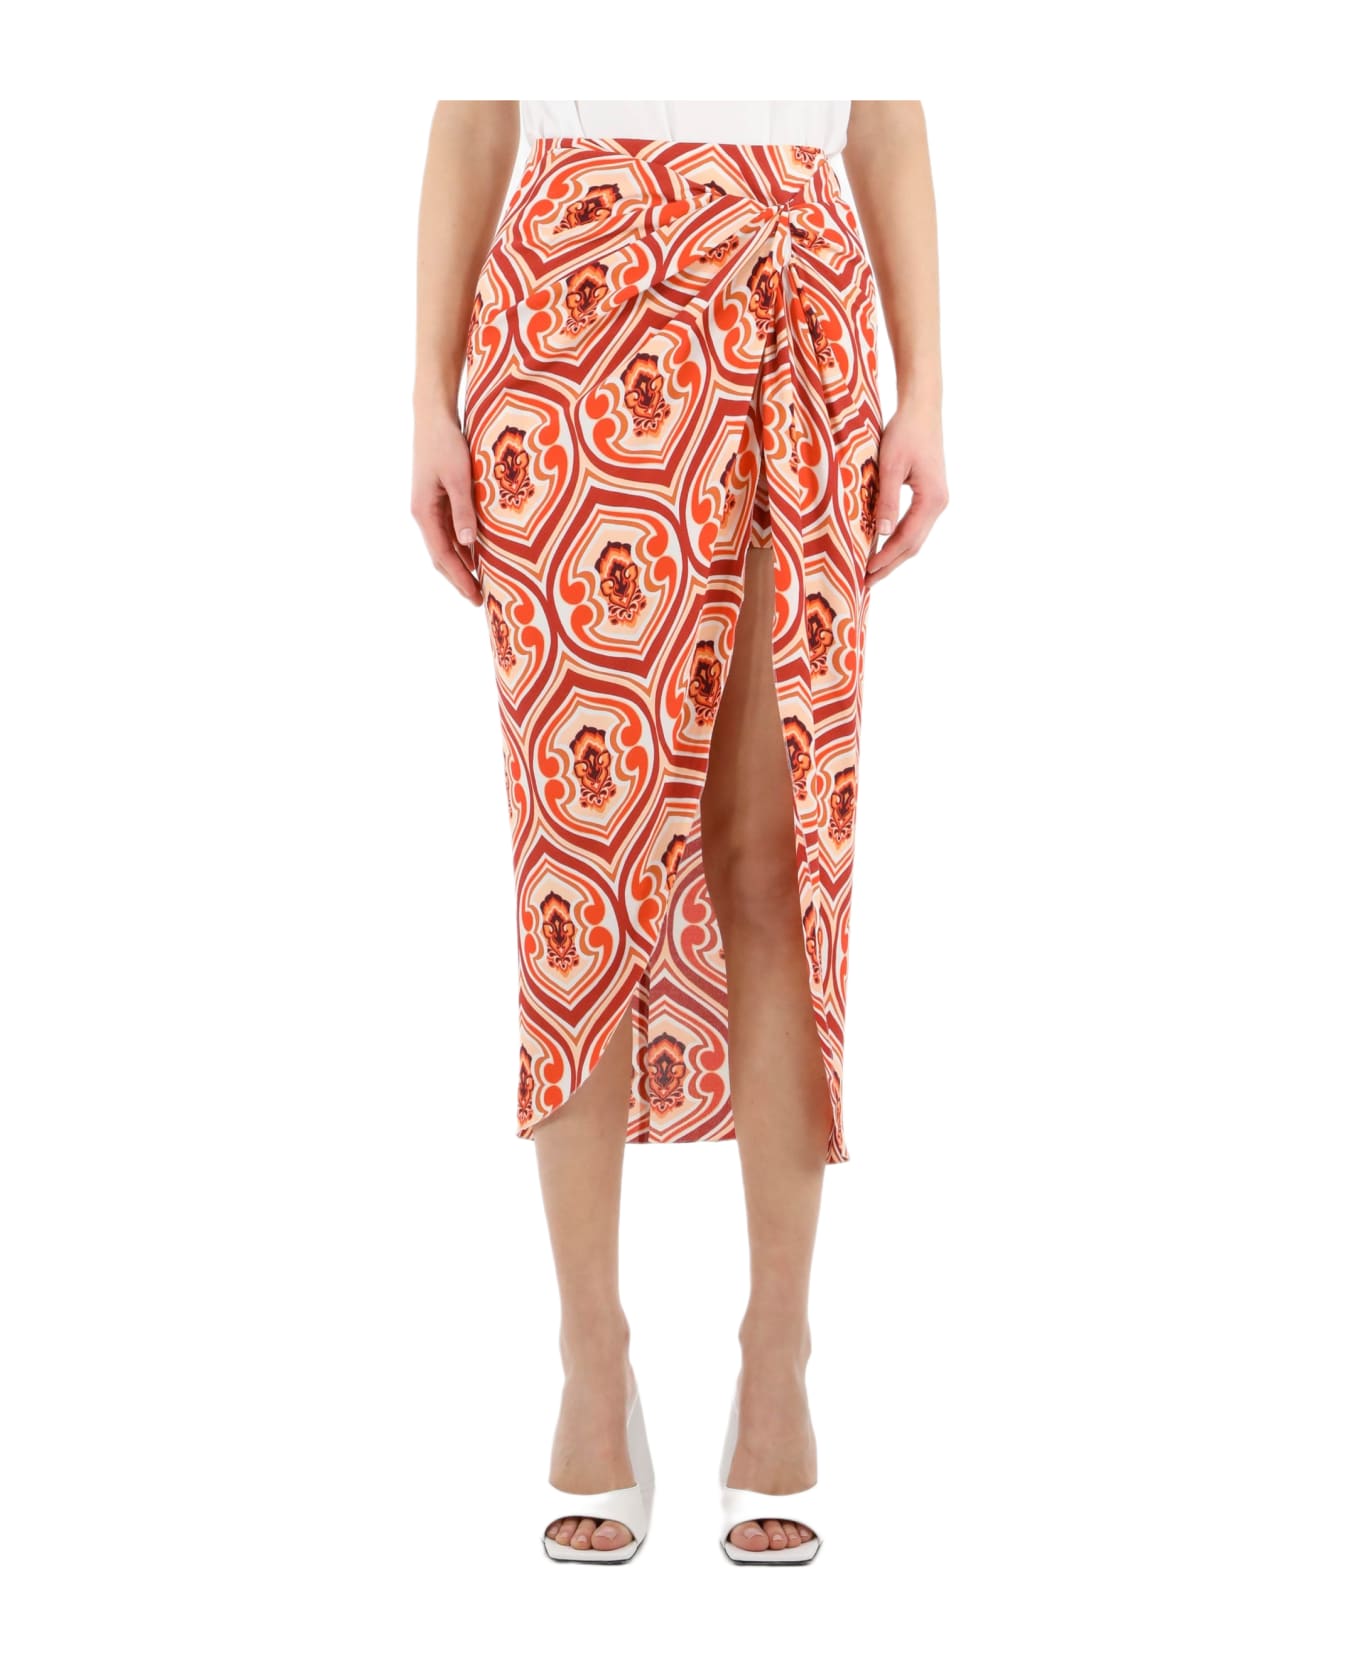 Etro Sarong Skirt With Graphic Print - ORANGE